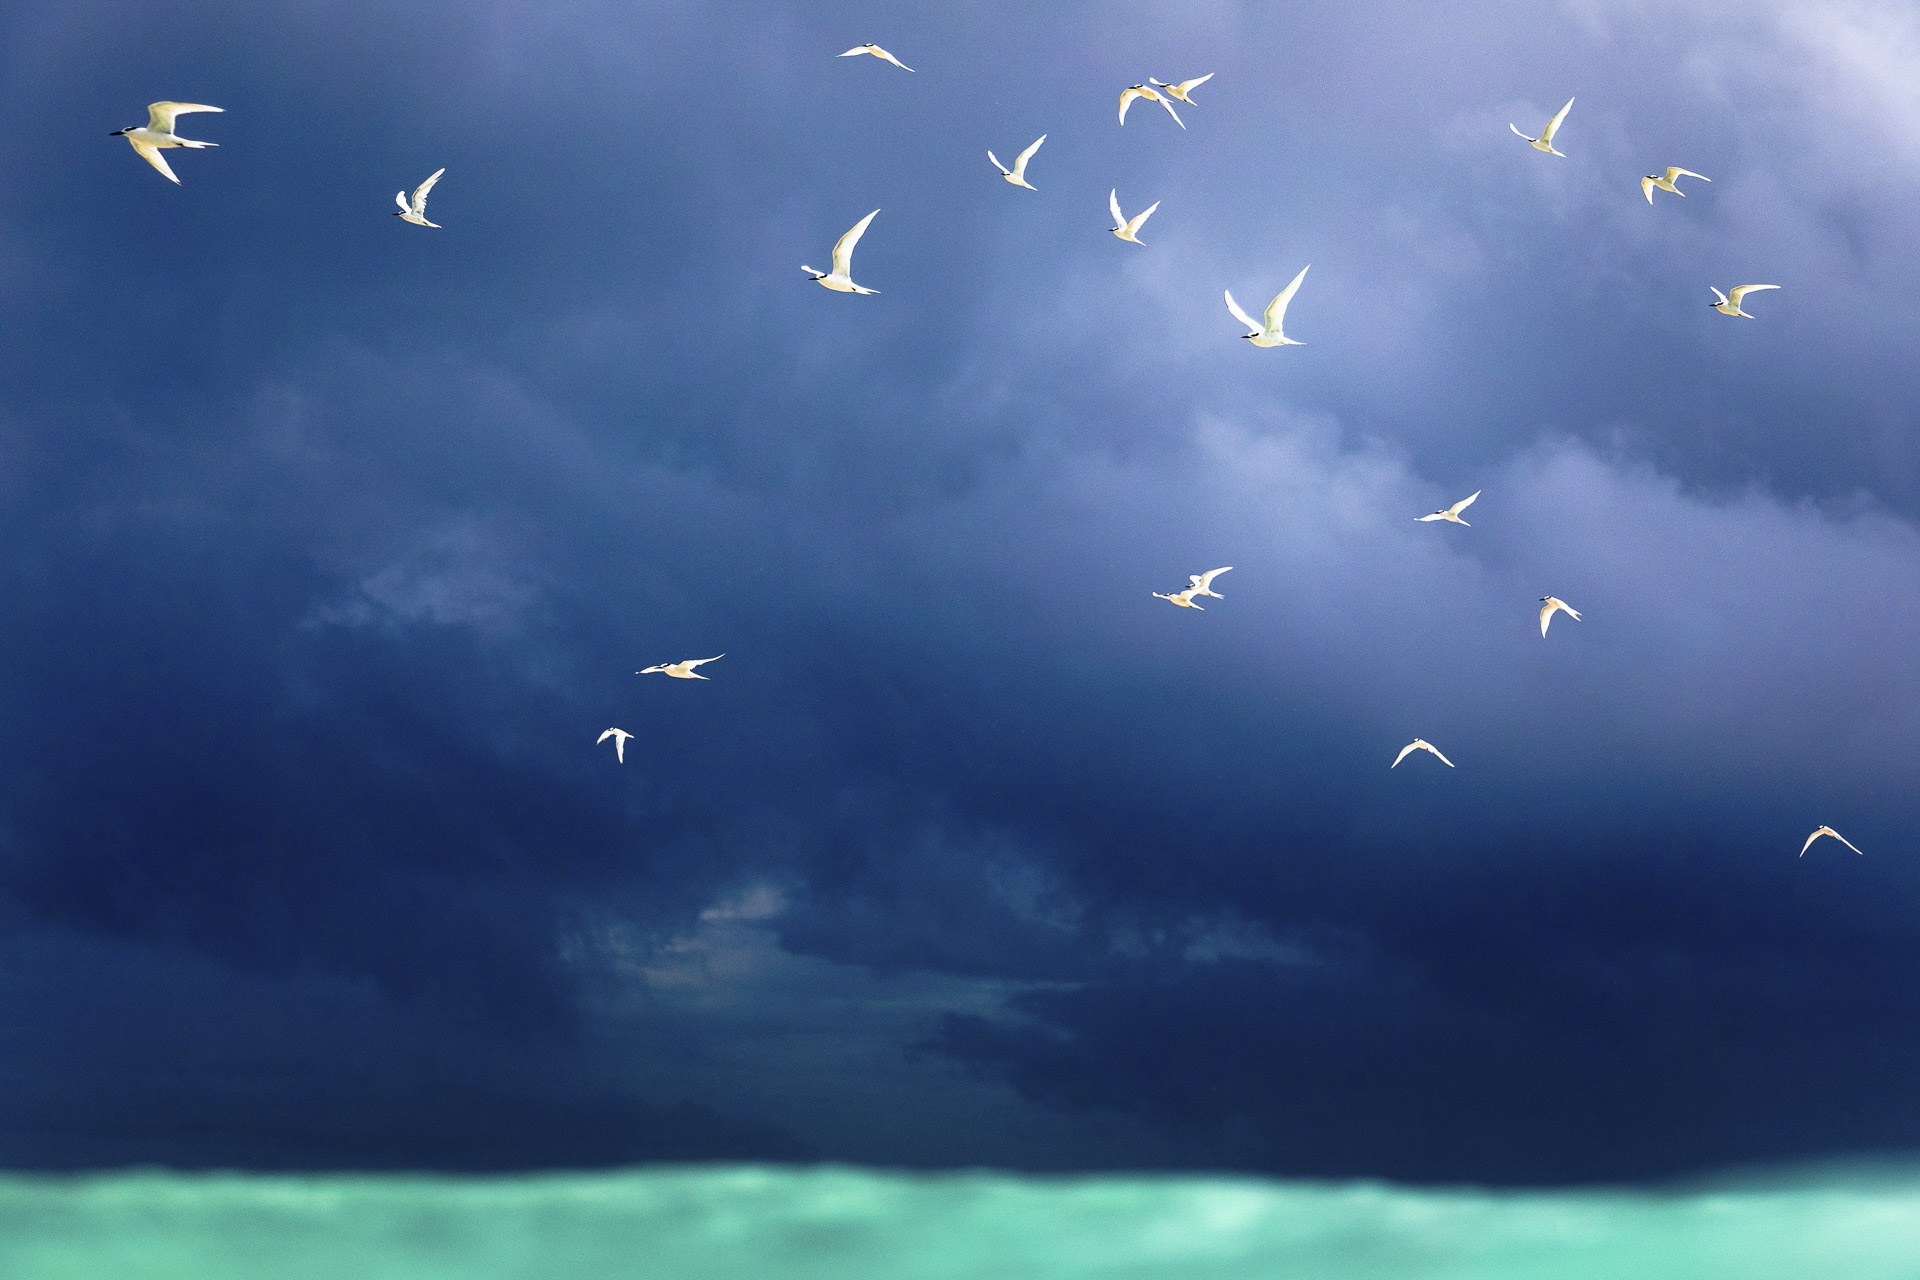 SarahLeePhoto_Maldives_Storm_White_Sea_Birds.jpg